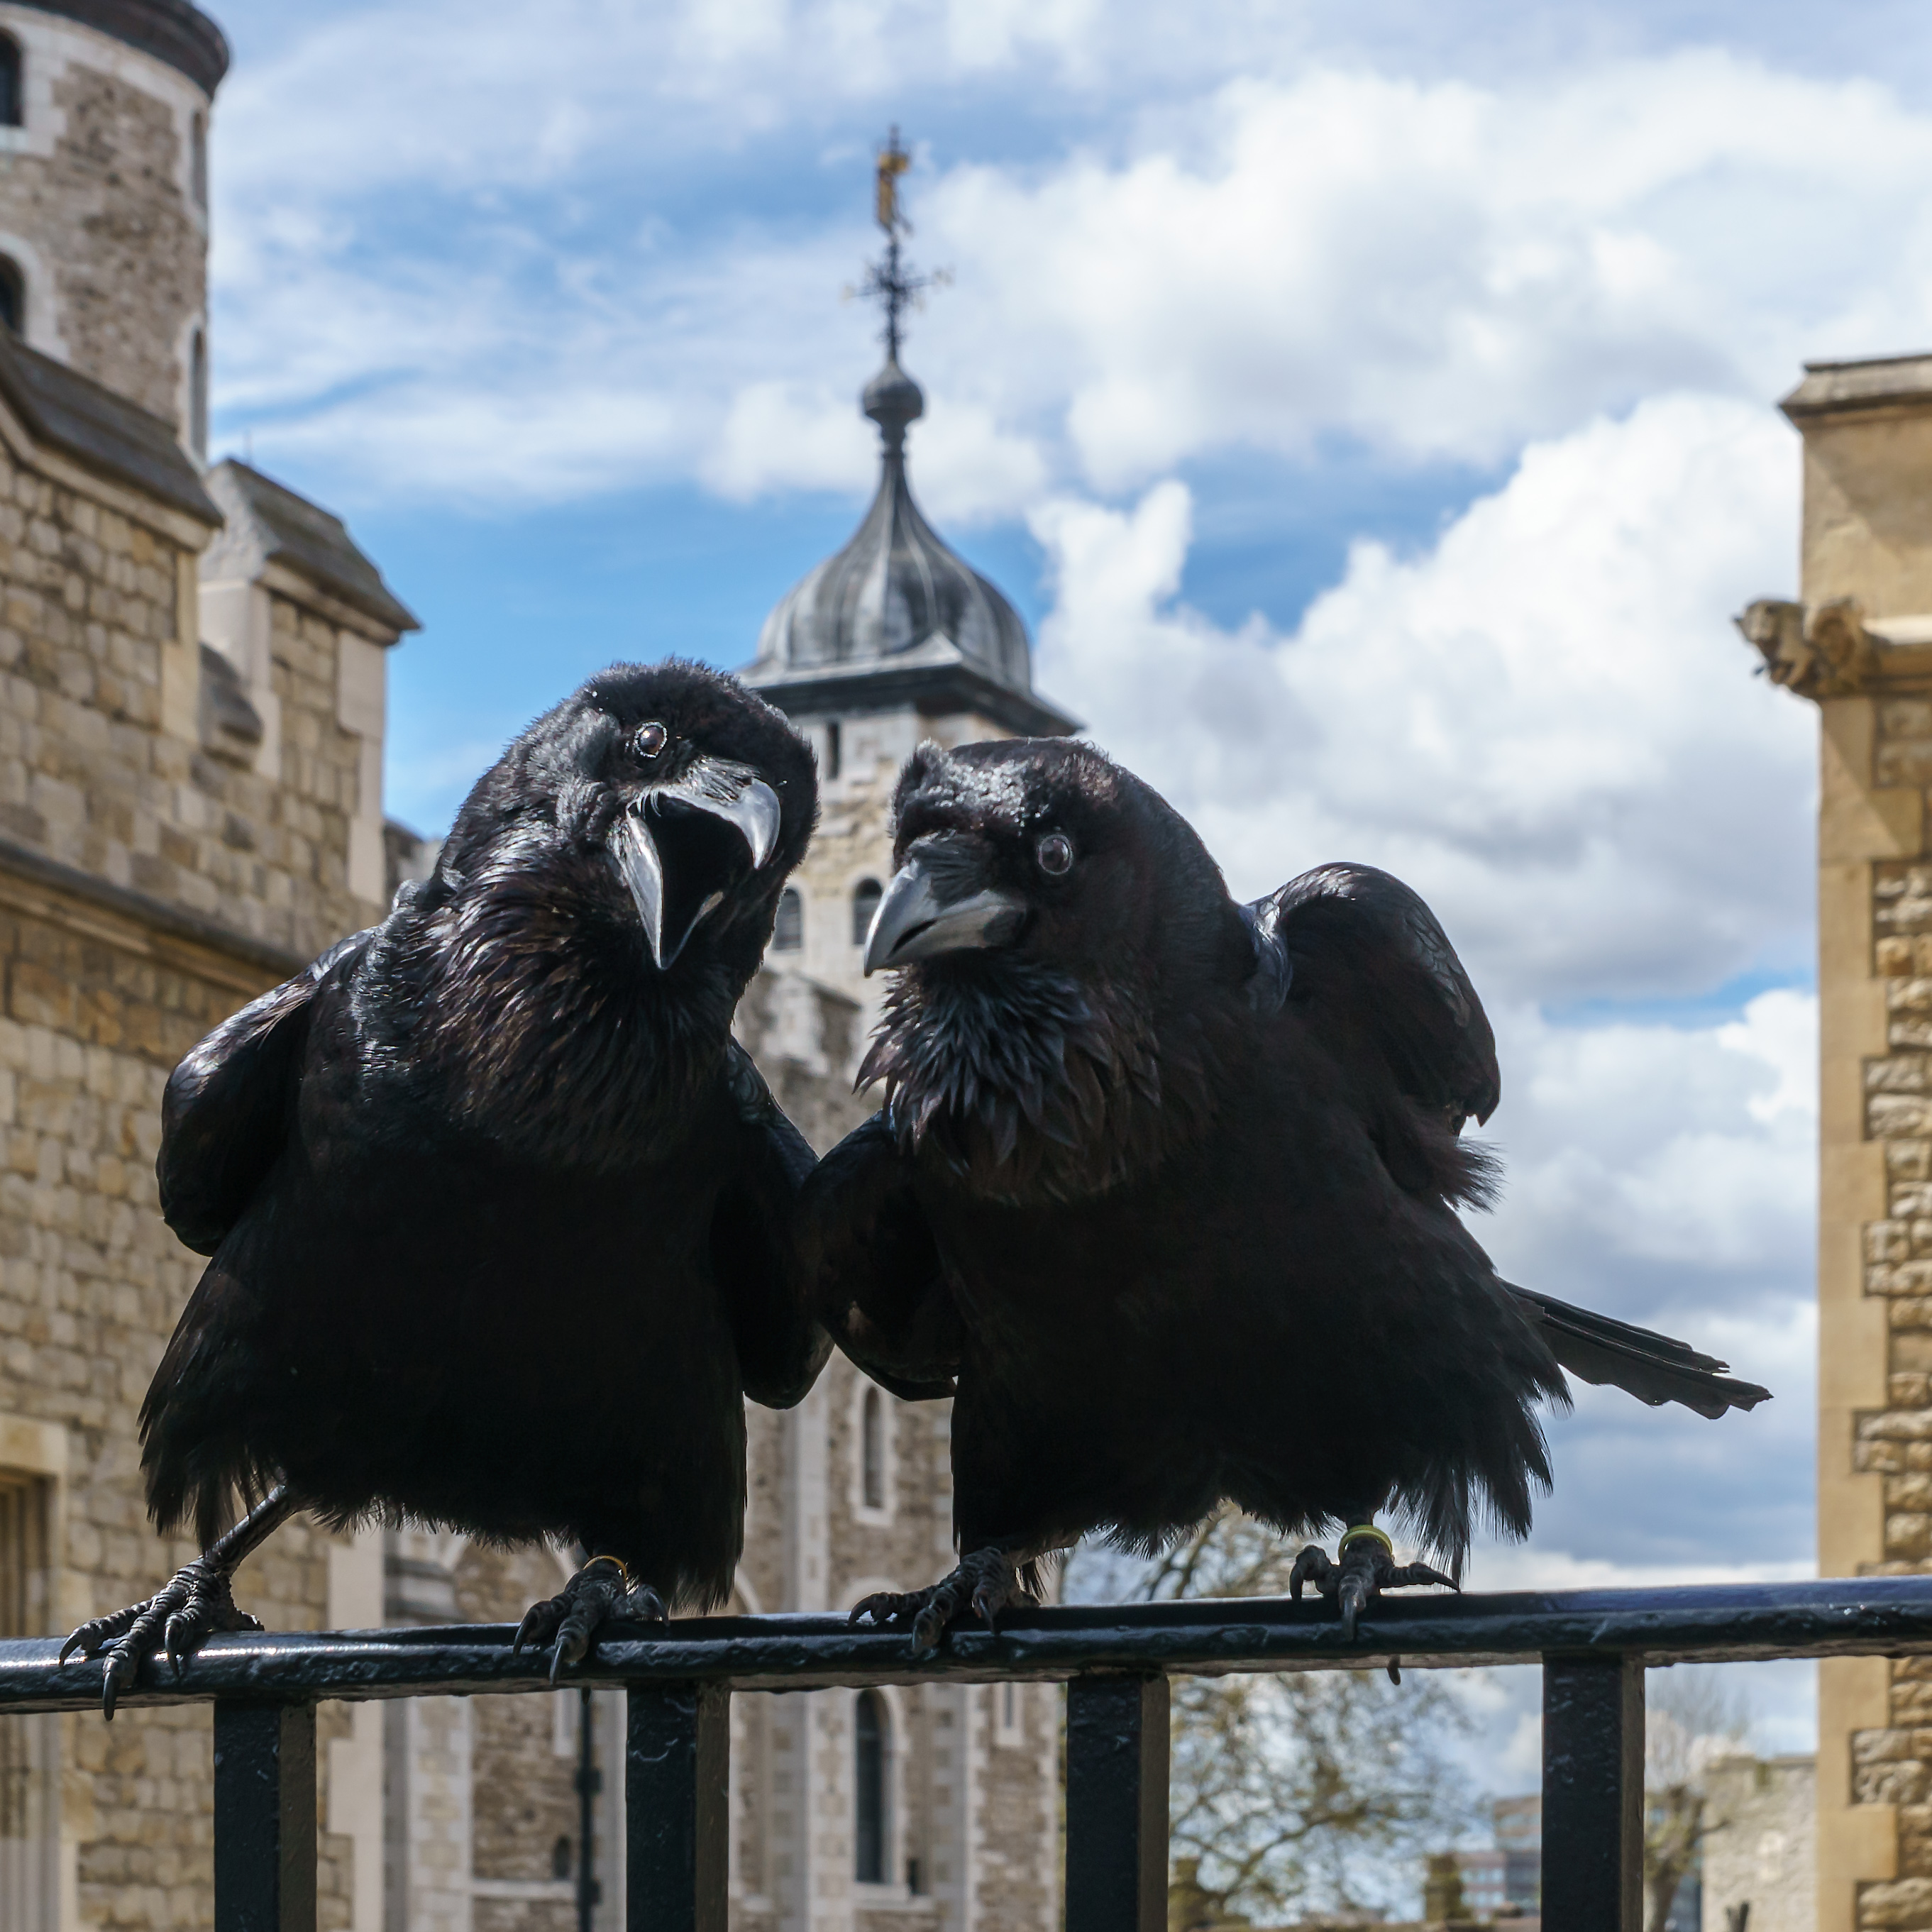 Two Ravens together